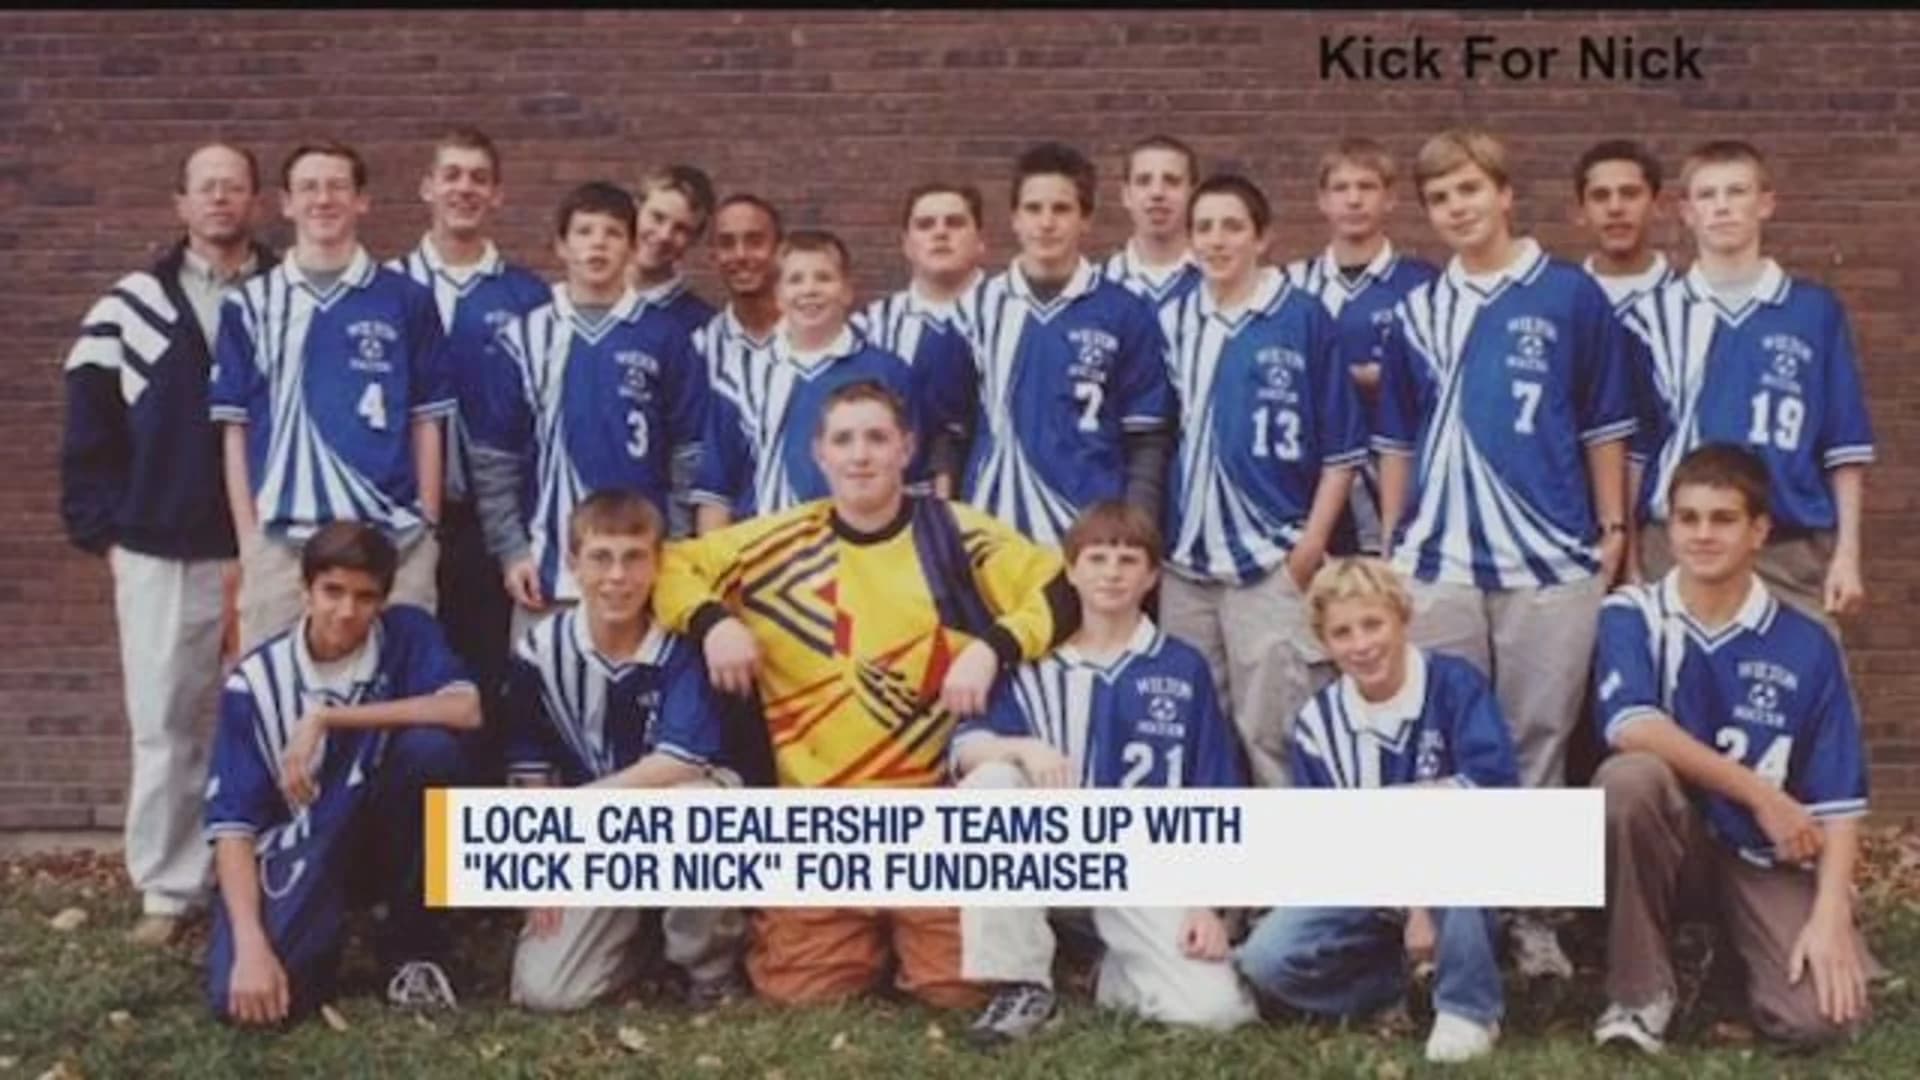 Stratford car dealership teams with nonprofit to donate soccer balls